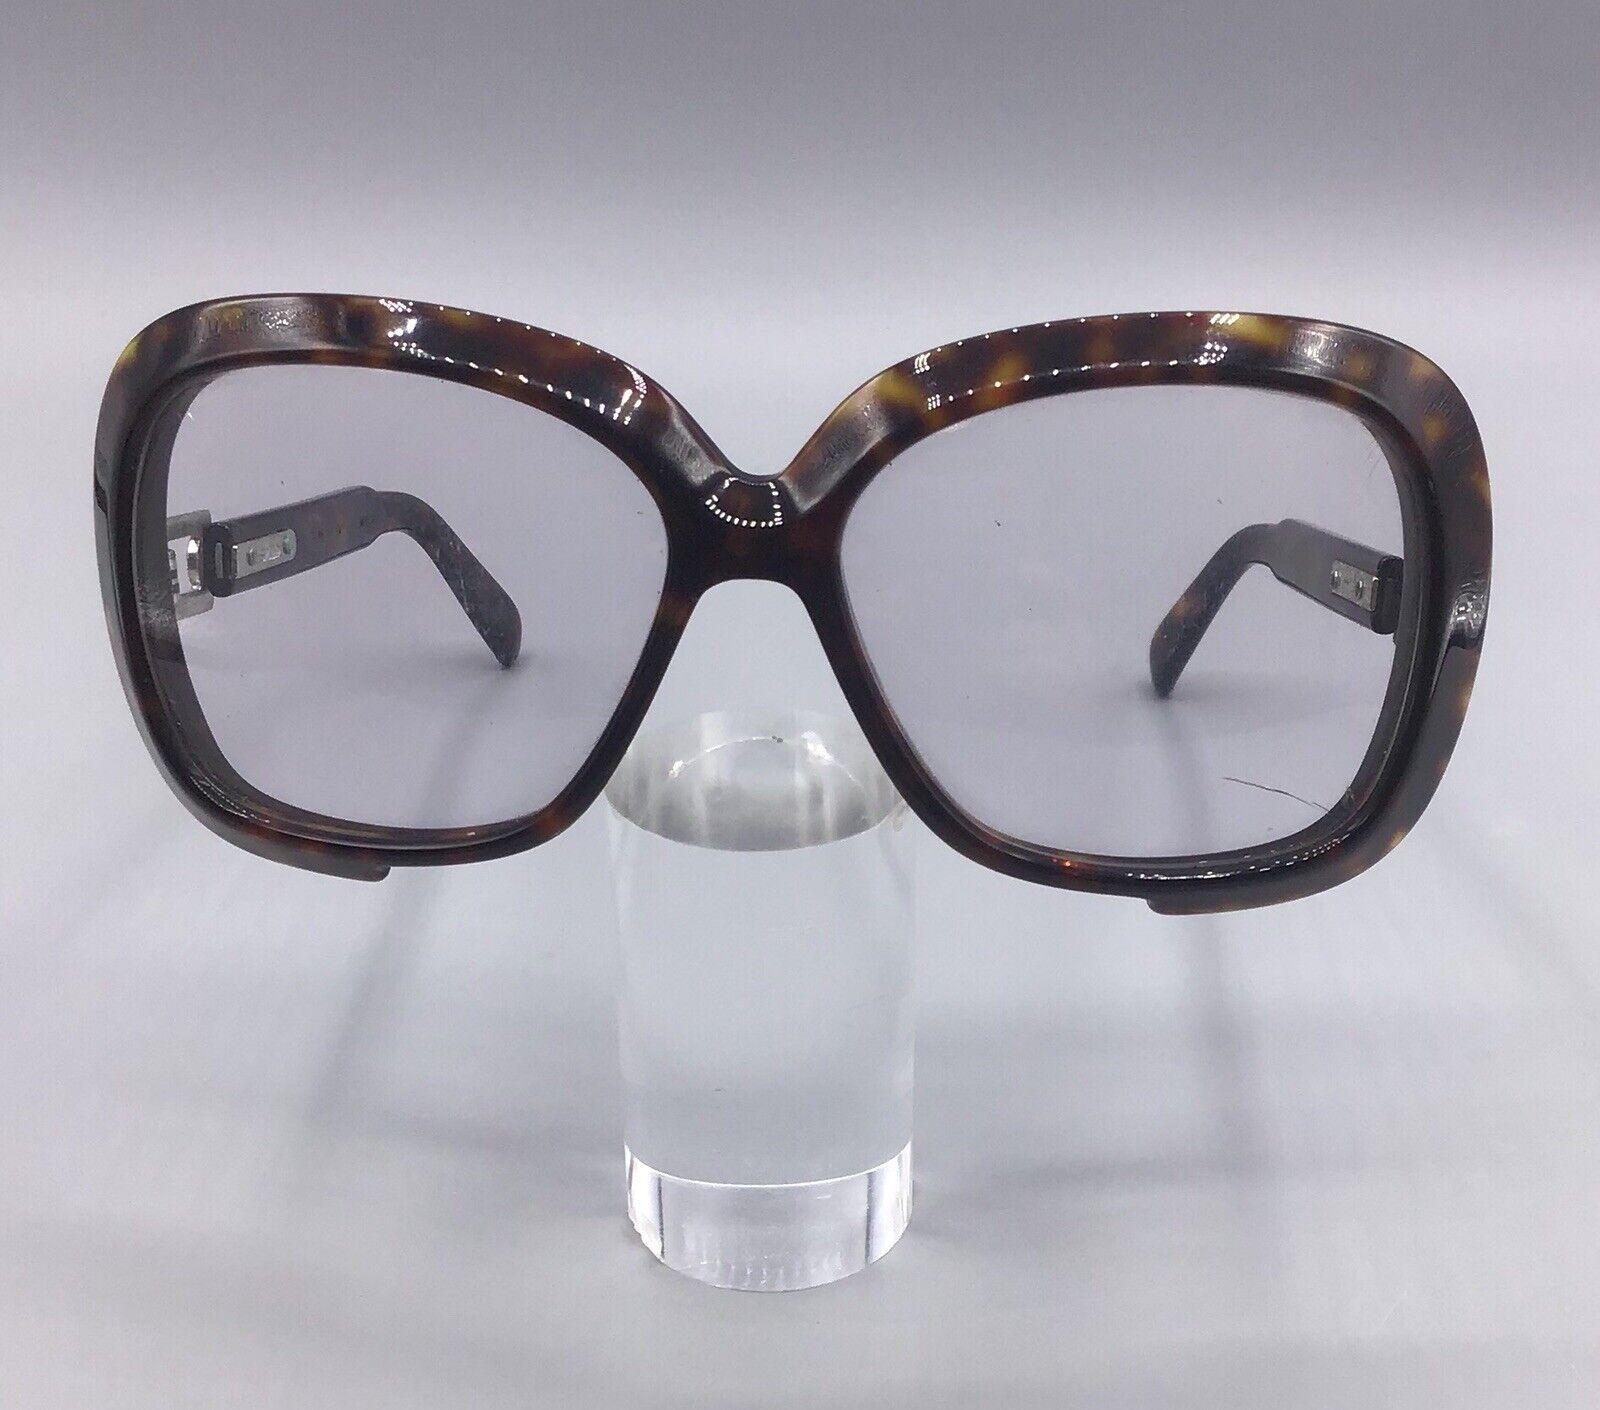 Silhouette Eyewear Glasses Occhiale Vintage Brillen Austria made frame